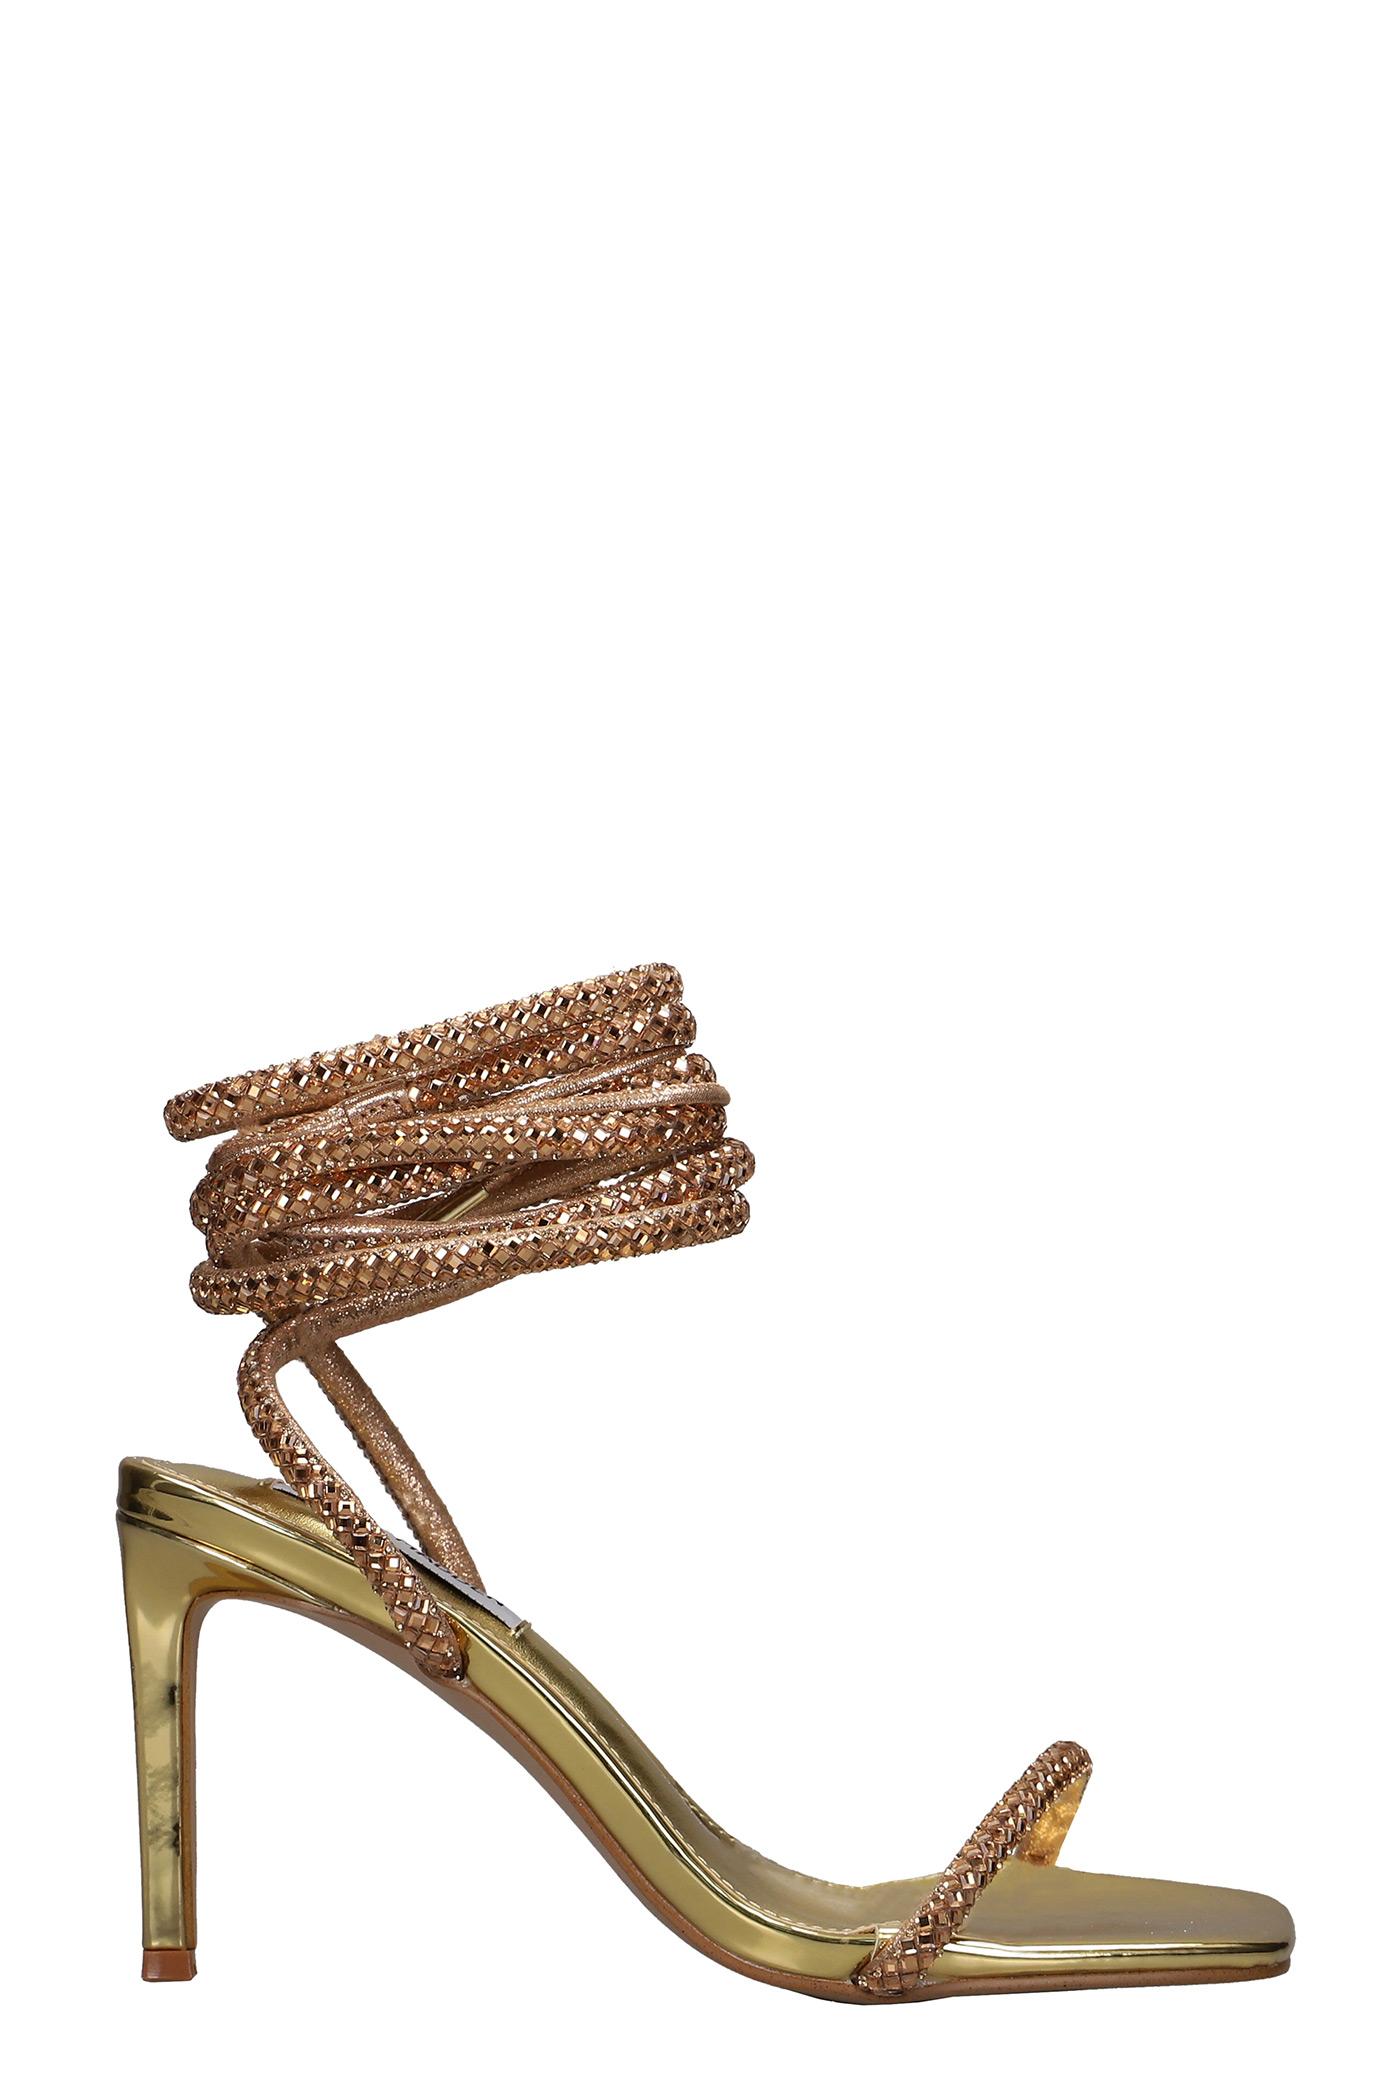 Steve Madden Enchanter Sandals In Gold Leather in Metallic | Lyst